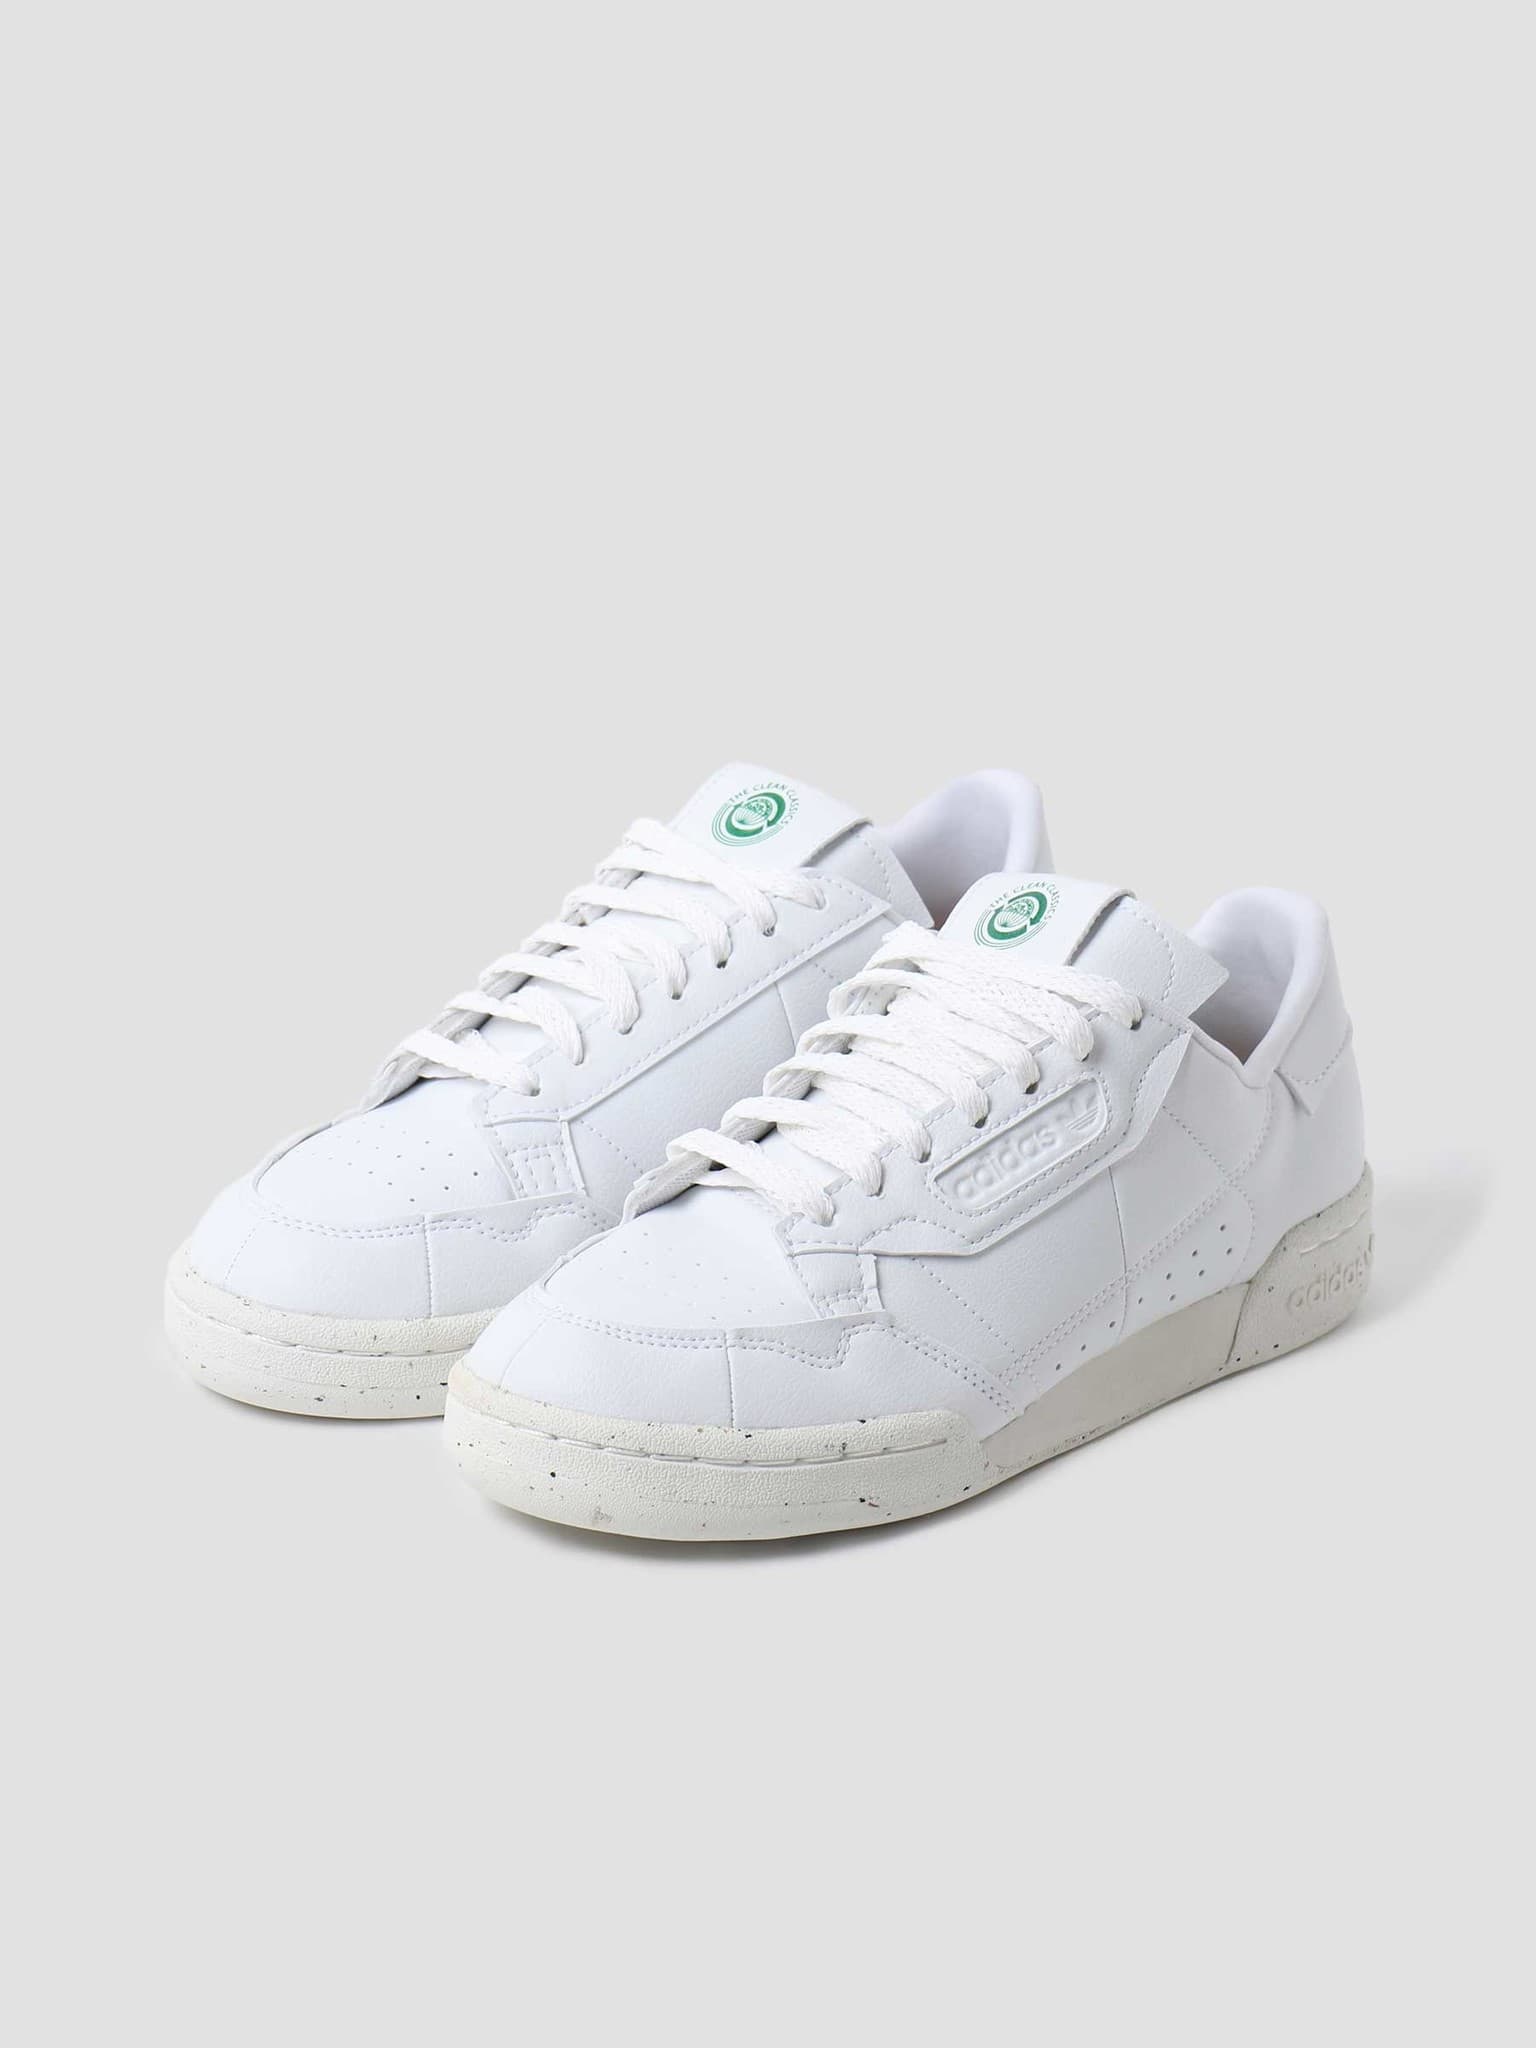 U Continental 80 Footwear White Off-White Green FV8468